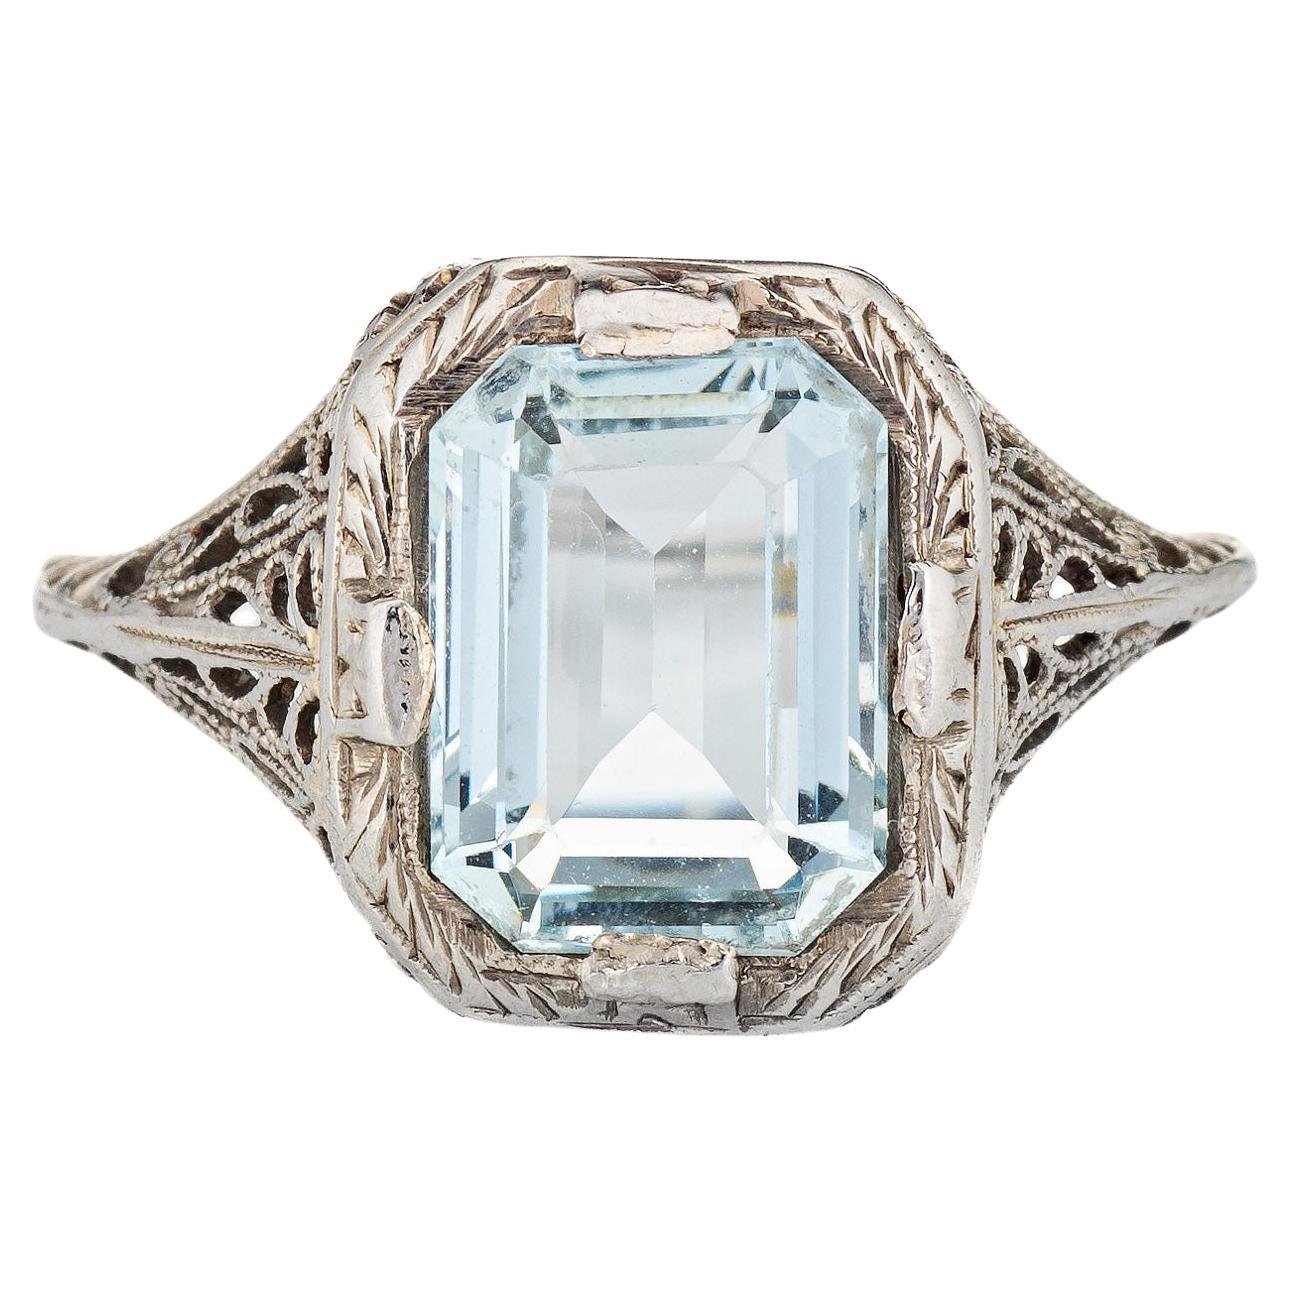 Vintage Art Deco Aquamarine Ring 18k White Gold Filigree Estate Jewelry 5.25